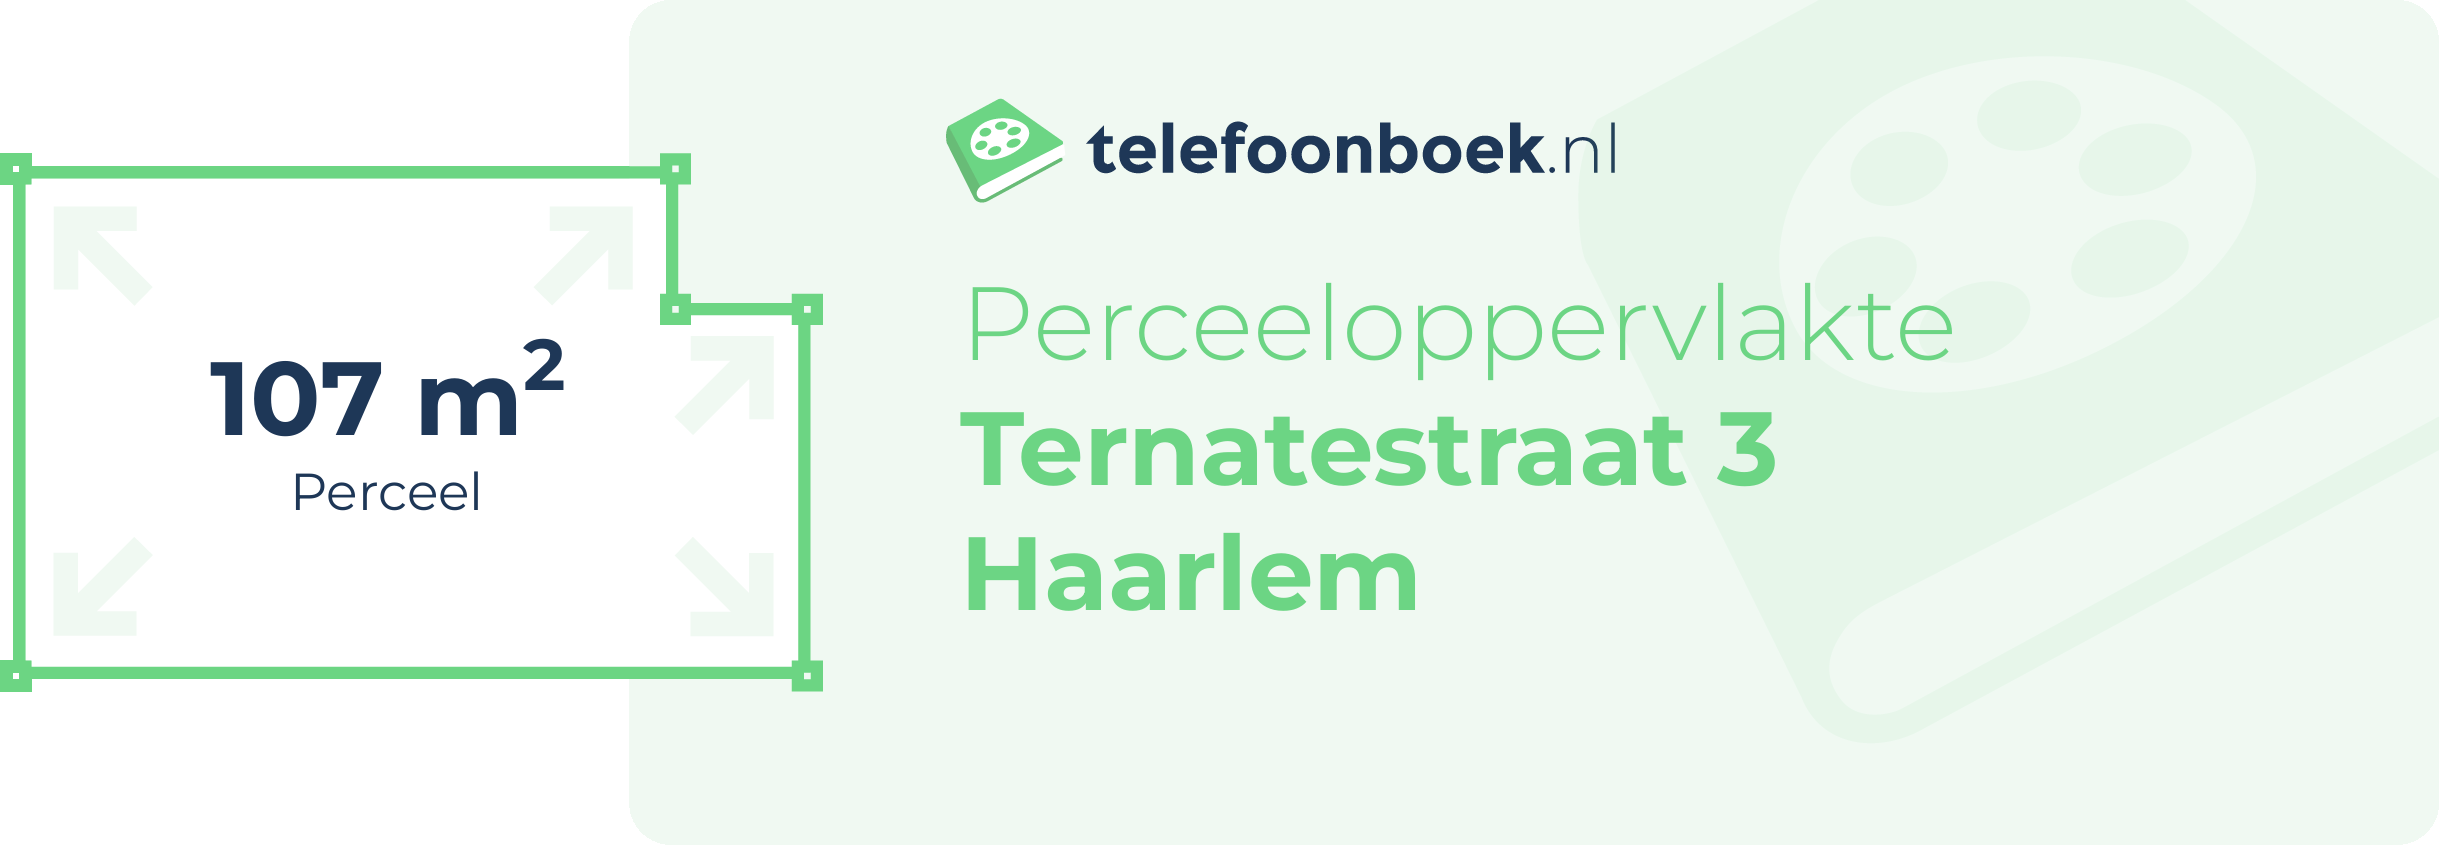 Perceeloppervlakte Ternatestraat 3 Haarlem